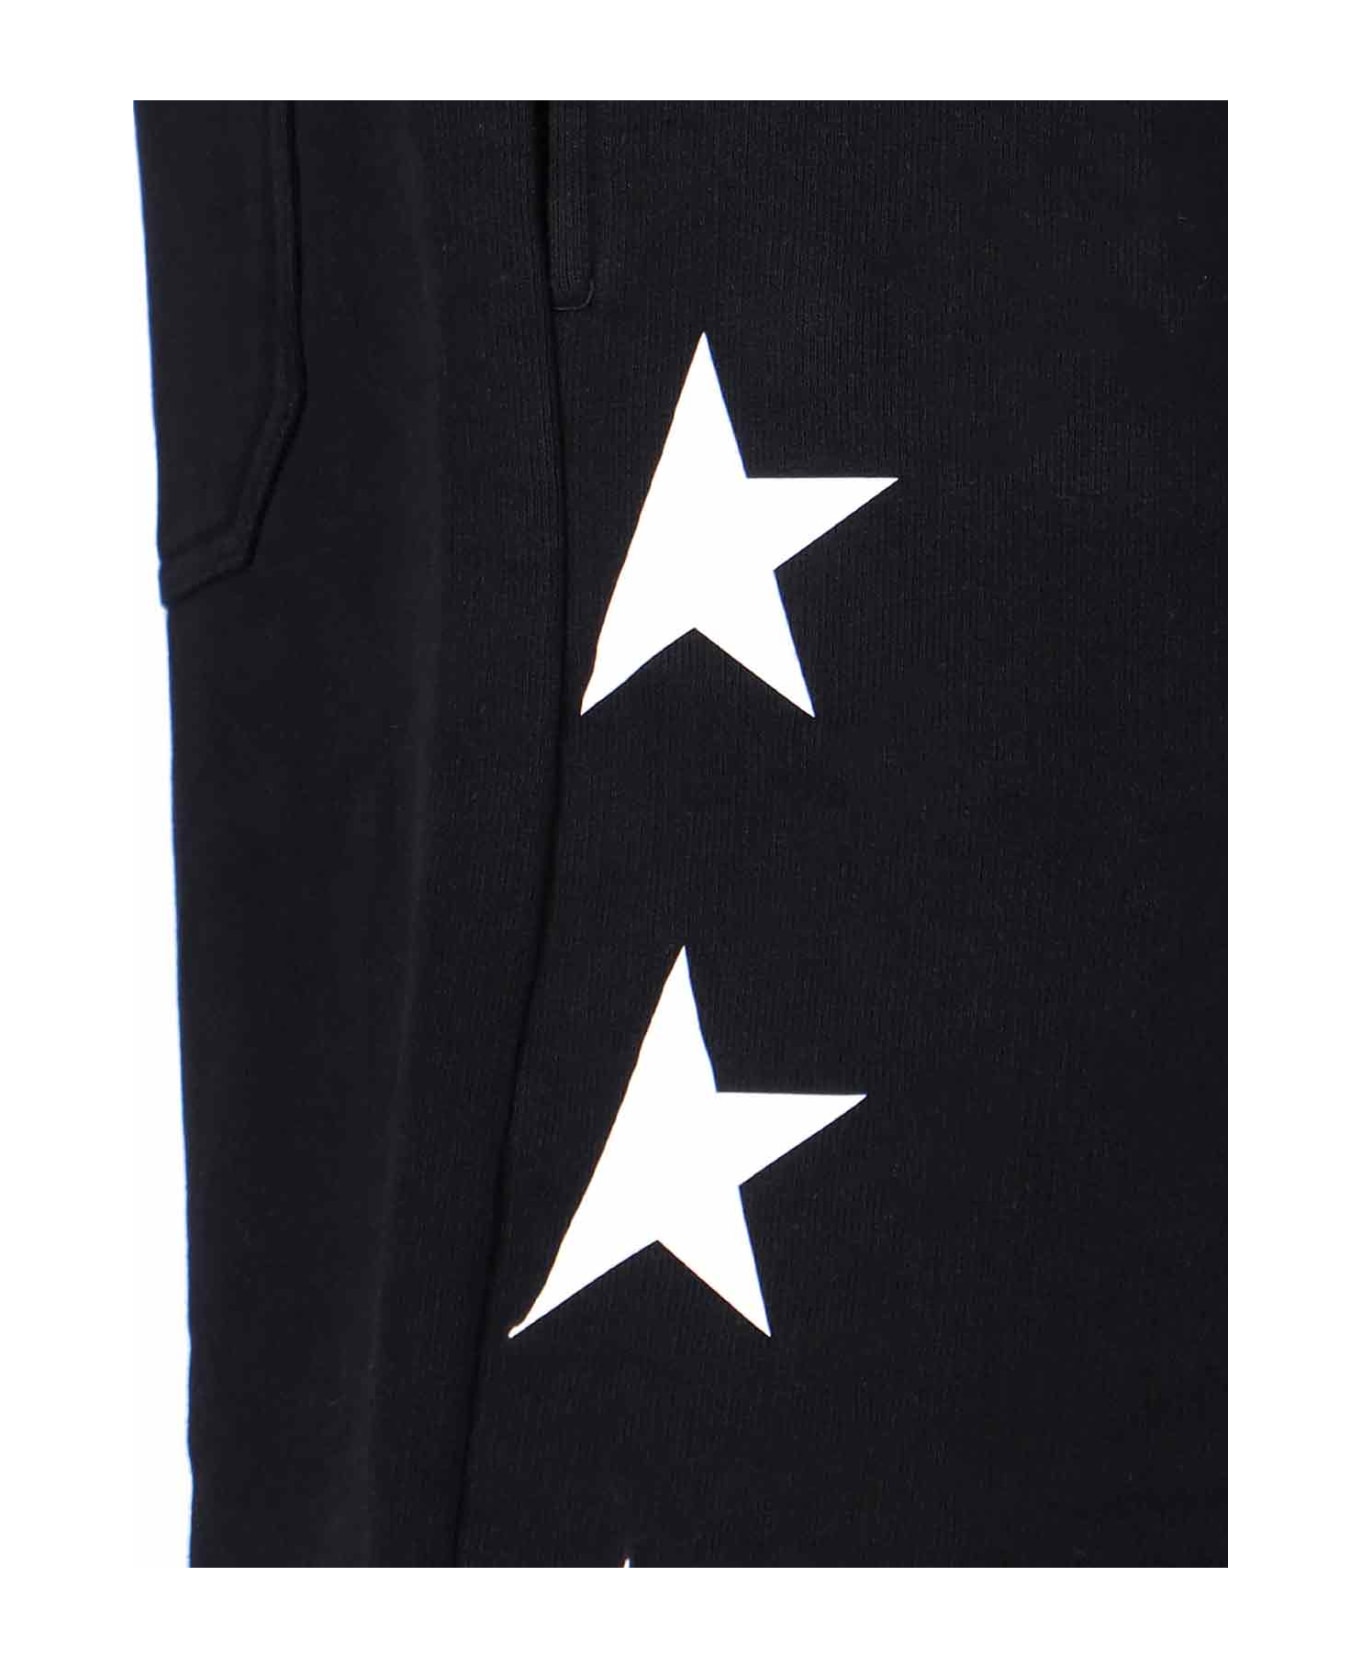 Golden Goose 'star' Shorts - Black   ショートパンツ